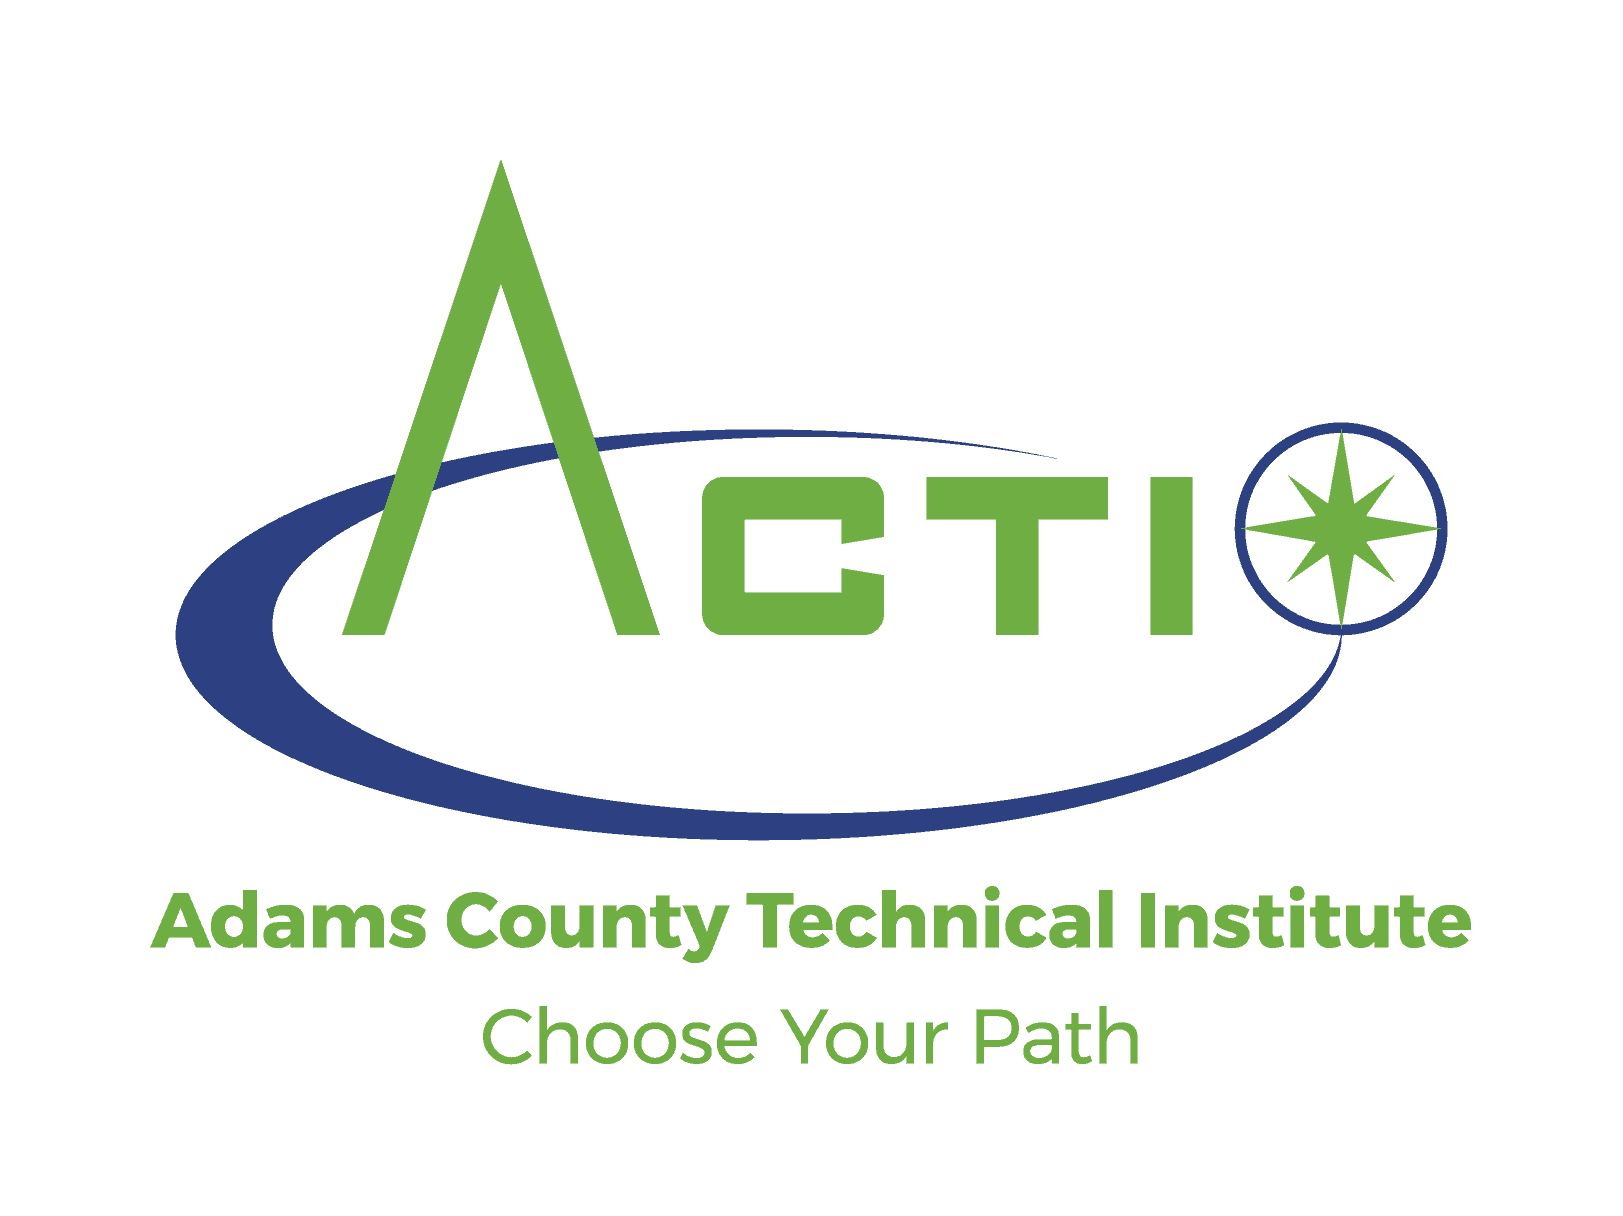 Adams County Technical Institute